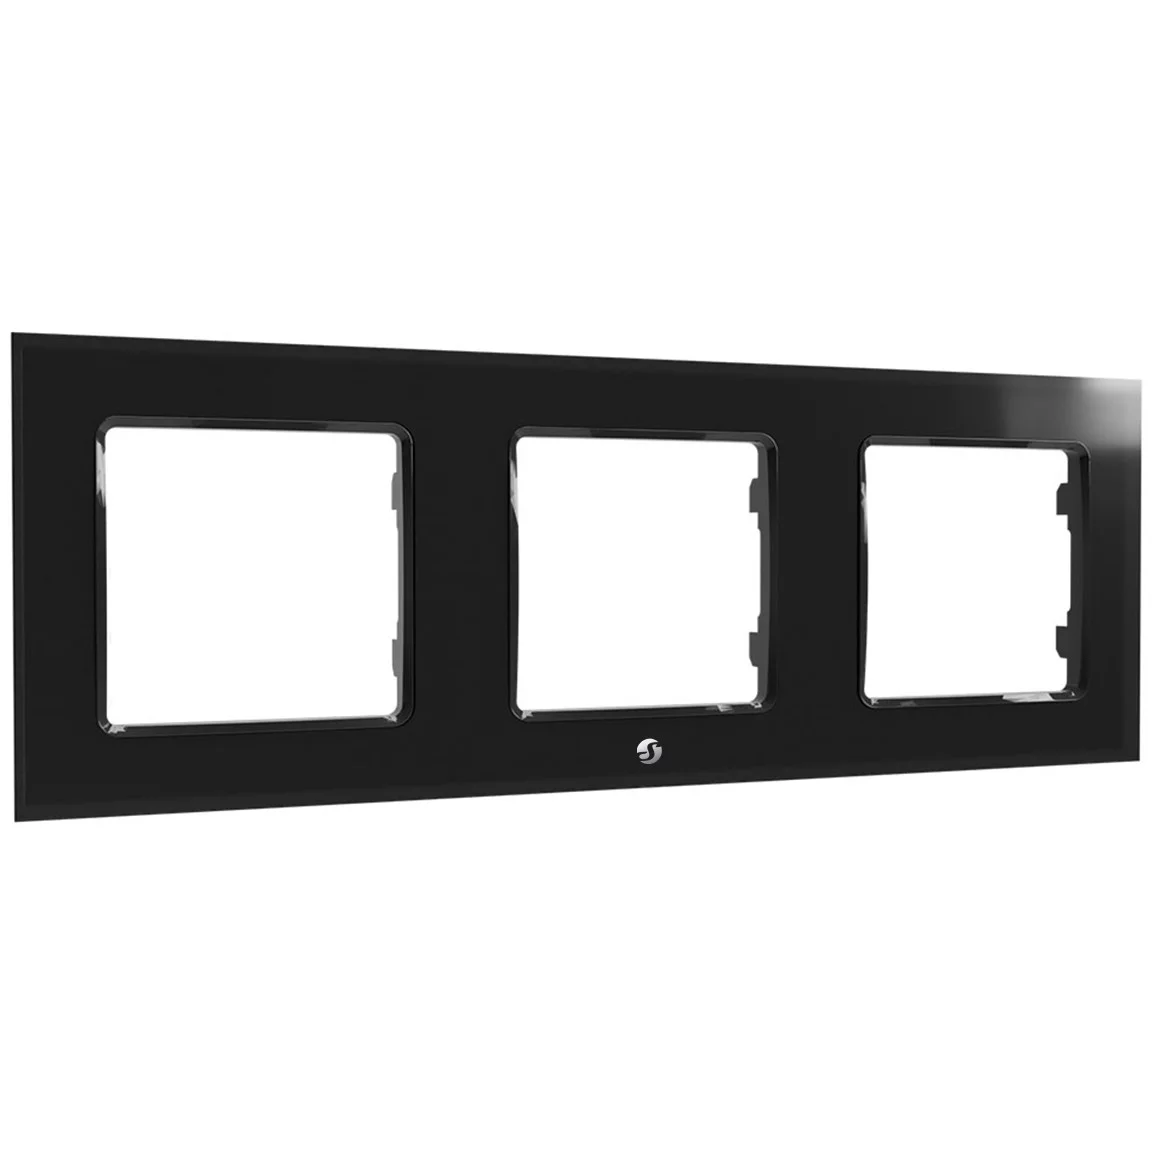 Home Shelly Accessories “Wall Frame 3“ Wandtaster Rahmen 3-fach Schwarz